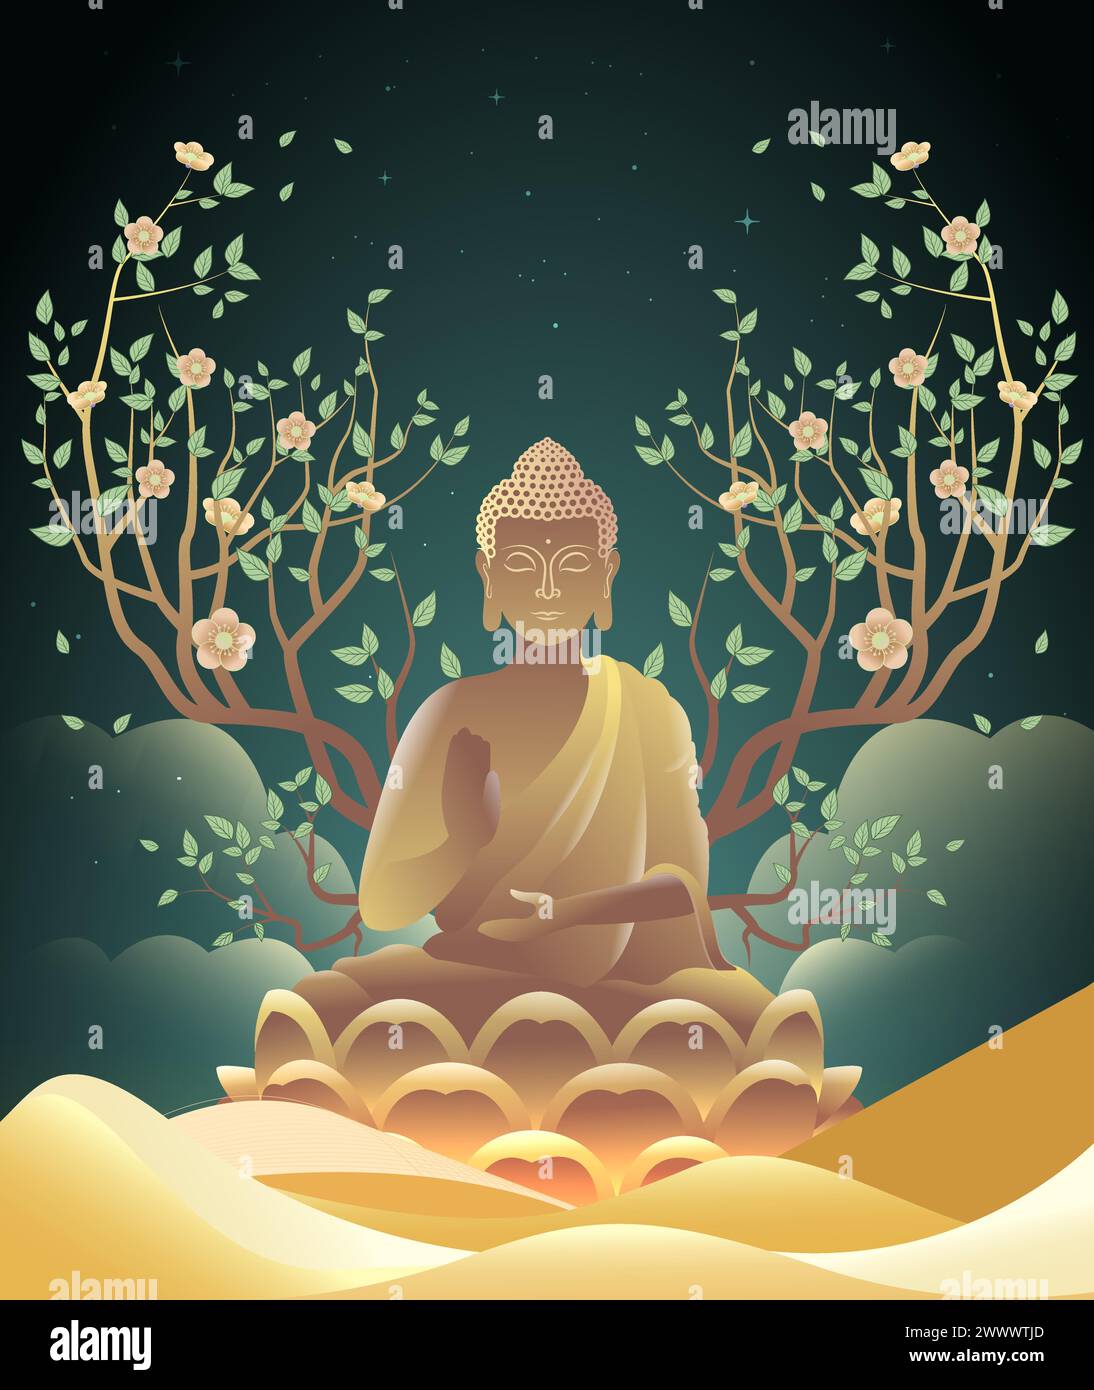 Happy Vesak Budha Purnima Day Background With Budha Statue Vector Illustration Stock Vector